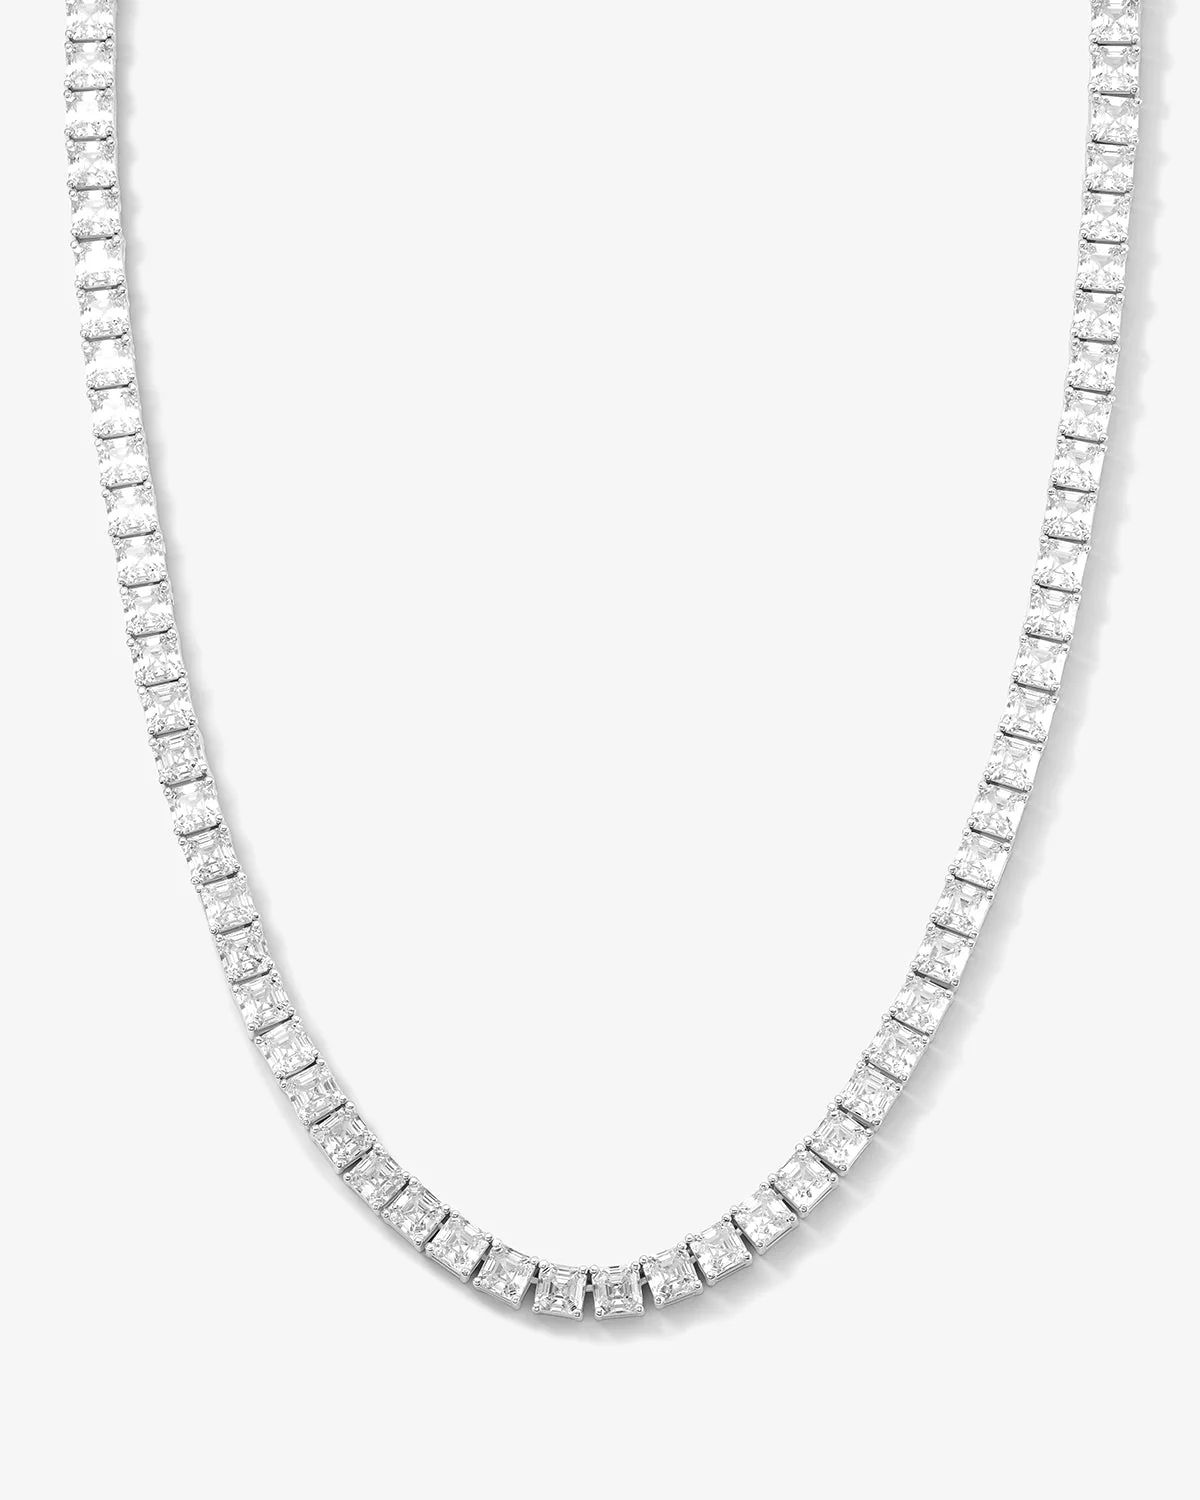 The Queen's Tennis Necklace 16" - Silver|White Diamondettes | Melinda Maria